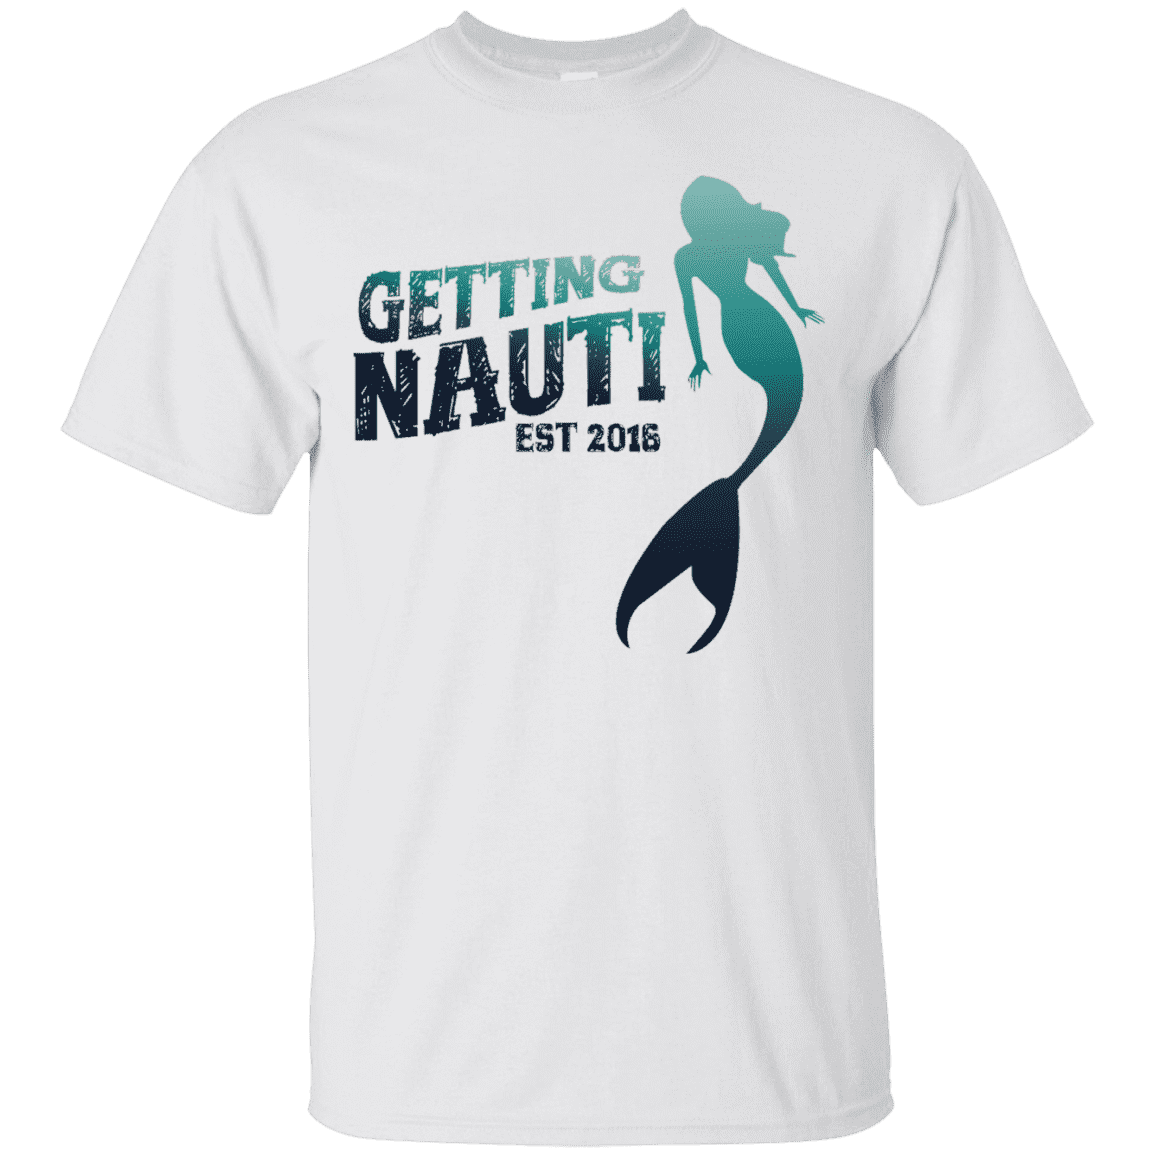 T-Shirts - Mermaid - Cotton T-Shirt